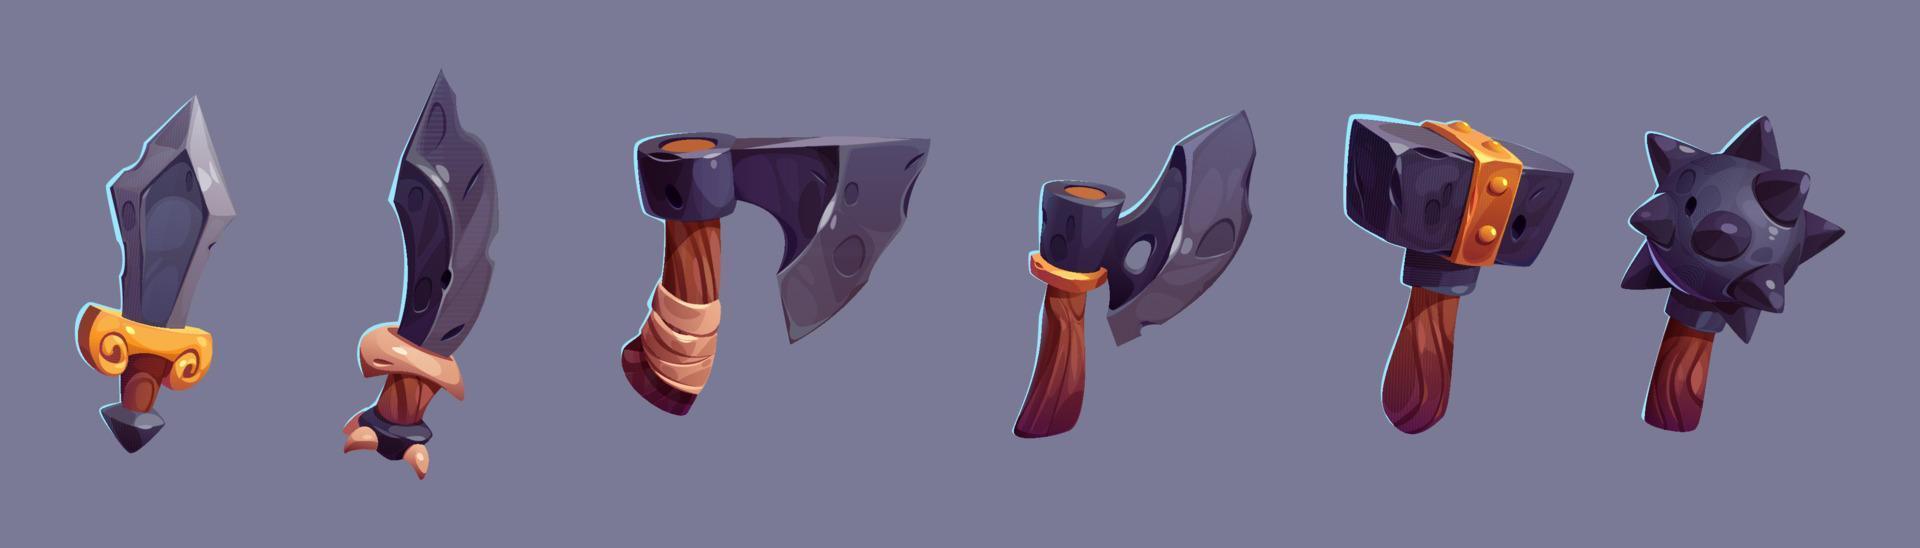 Weapon icons of axe, mace, sword, dagger, hammer vector